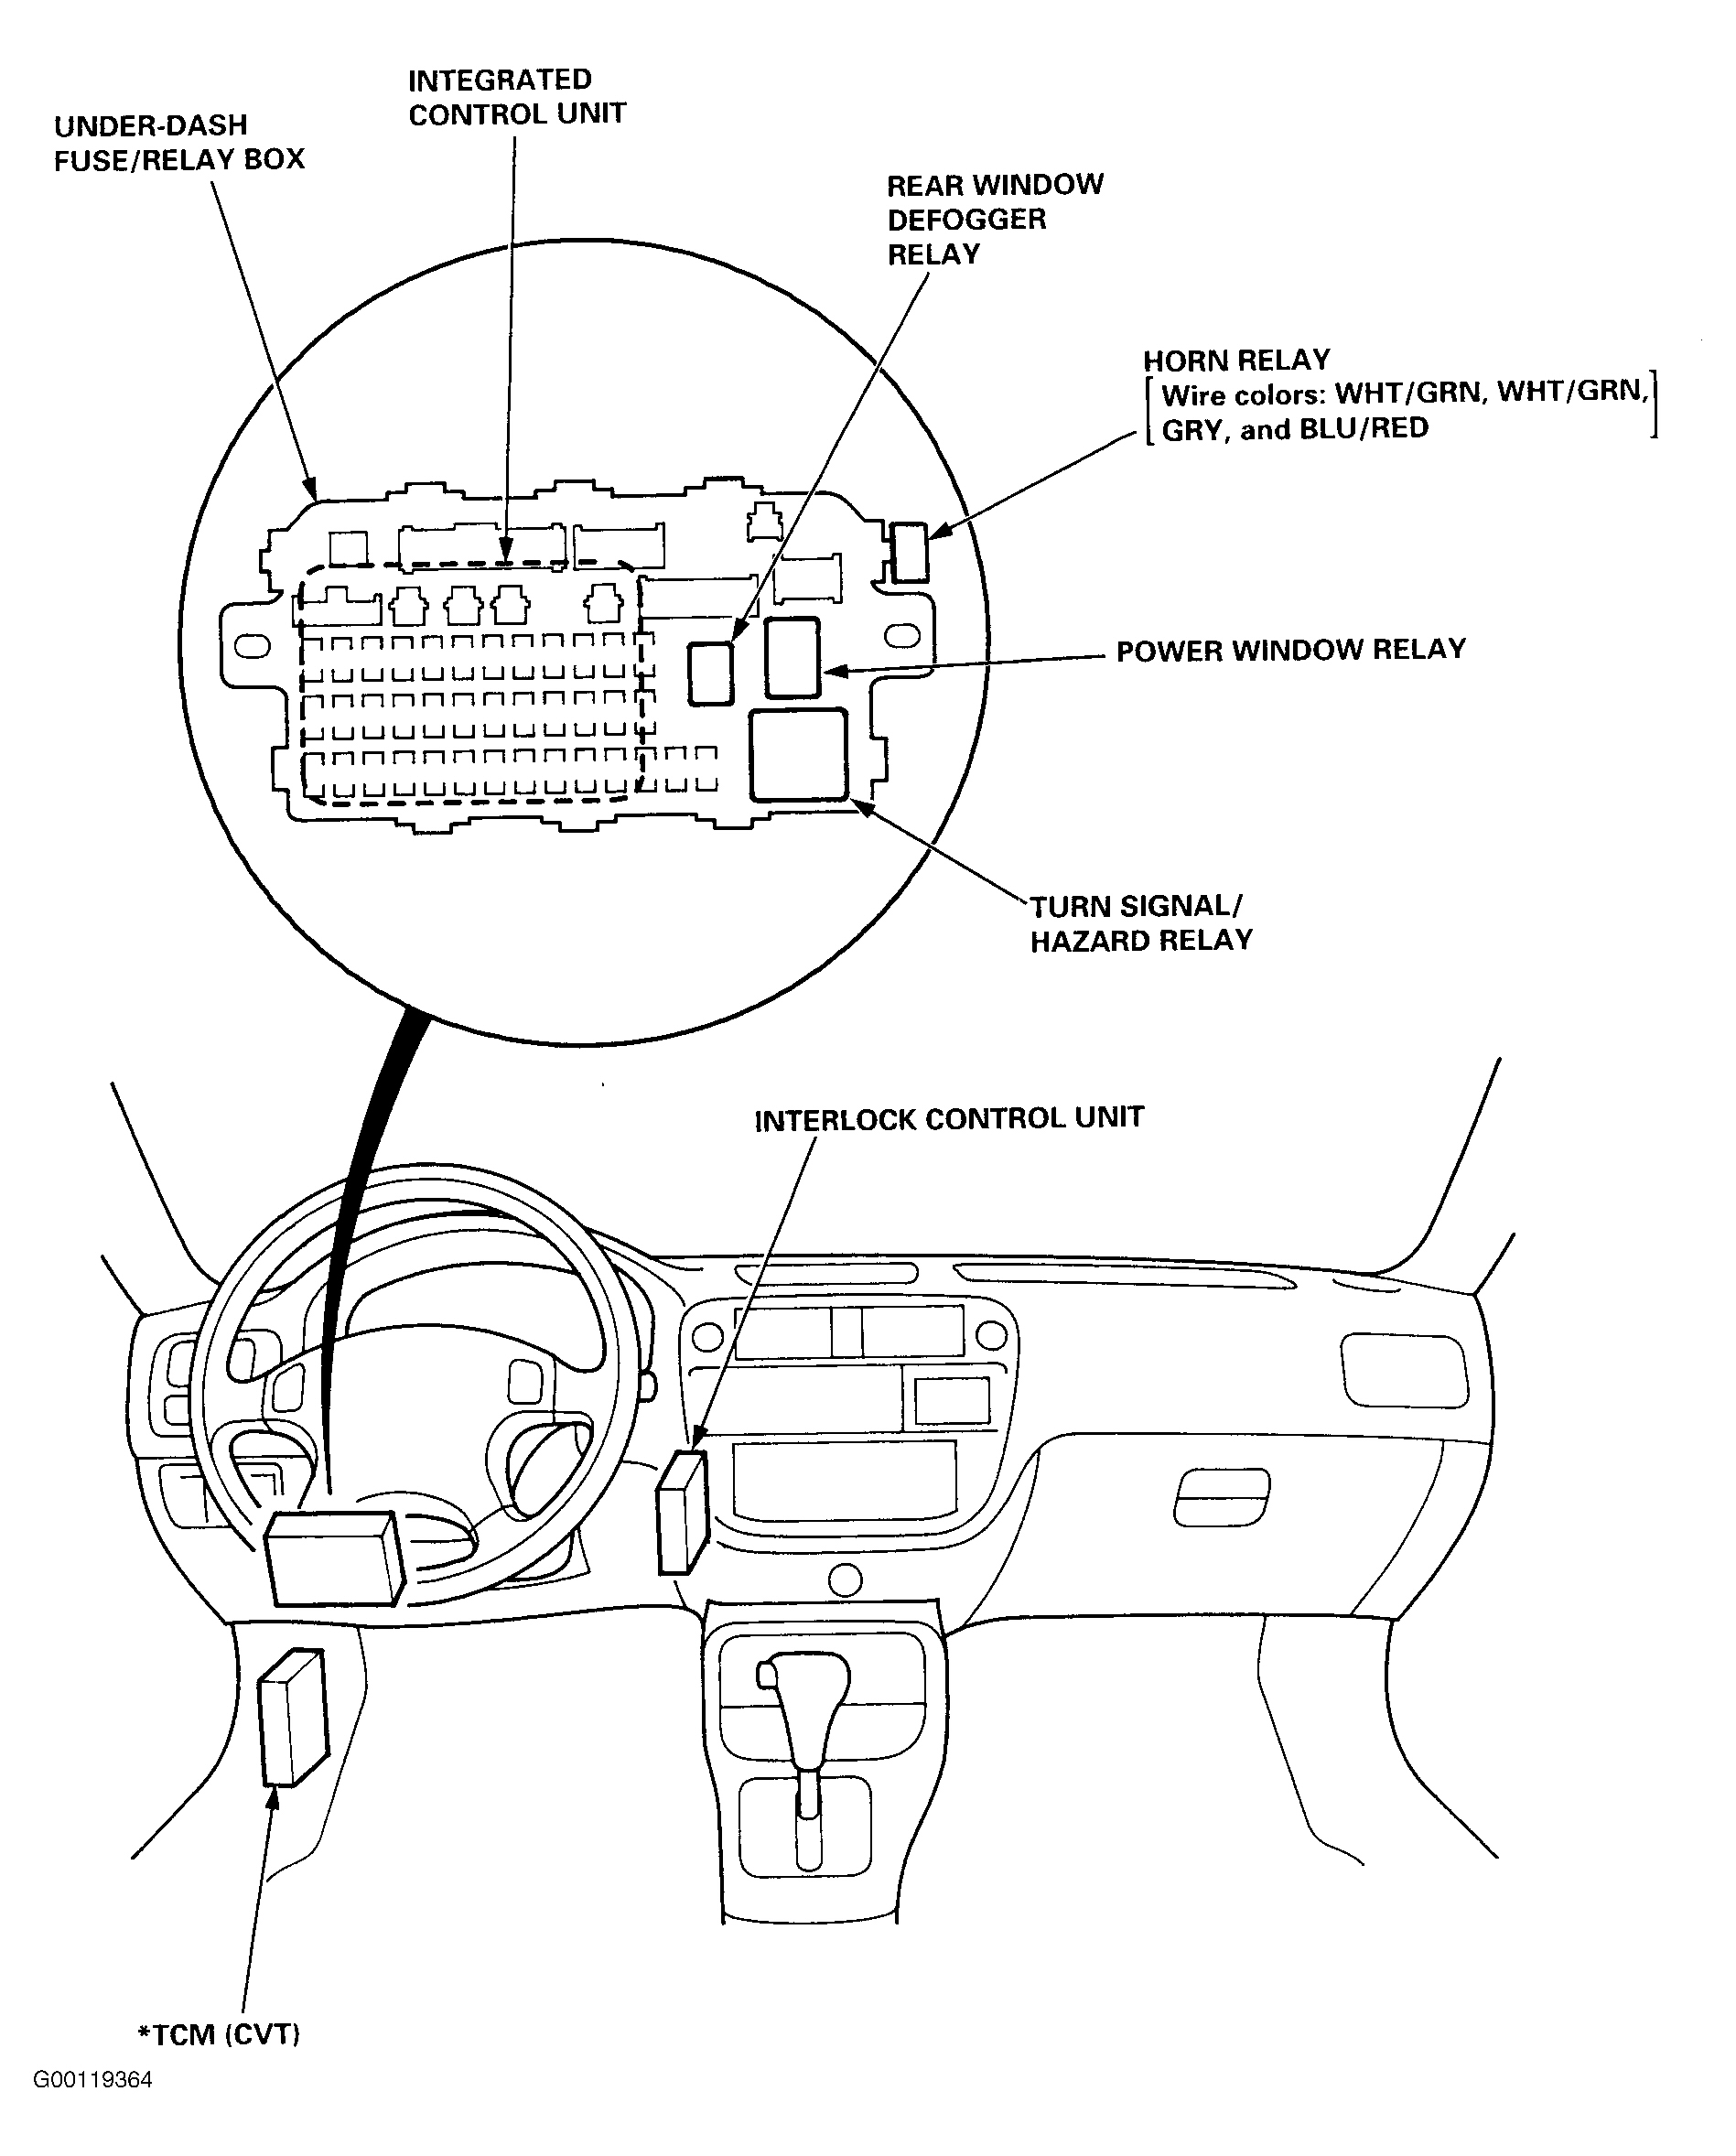 Honda Civic DX 1997 - Component Locations -  Locating Under-Dash Fuse/Relay Box (1996-97)